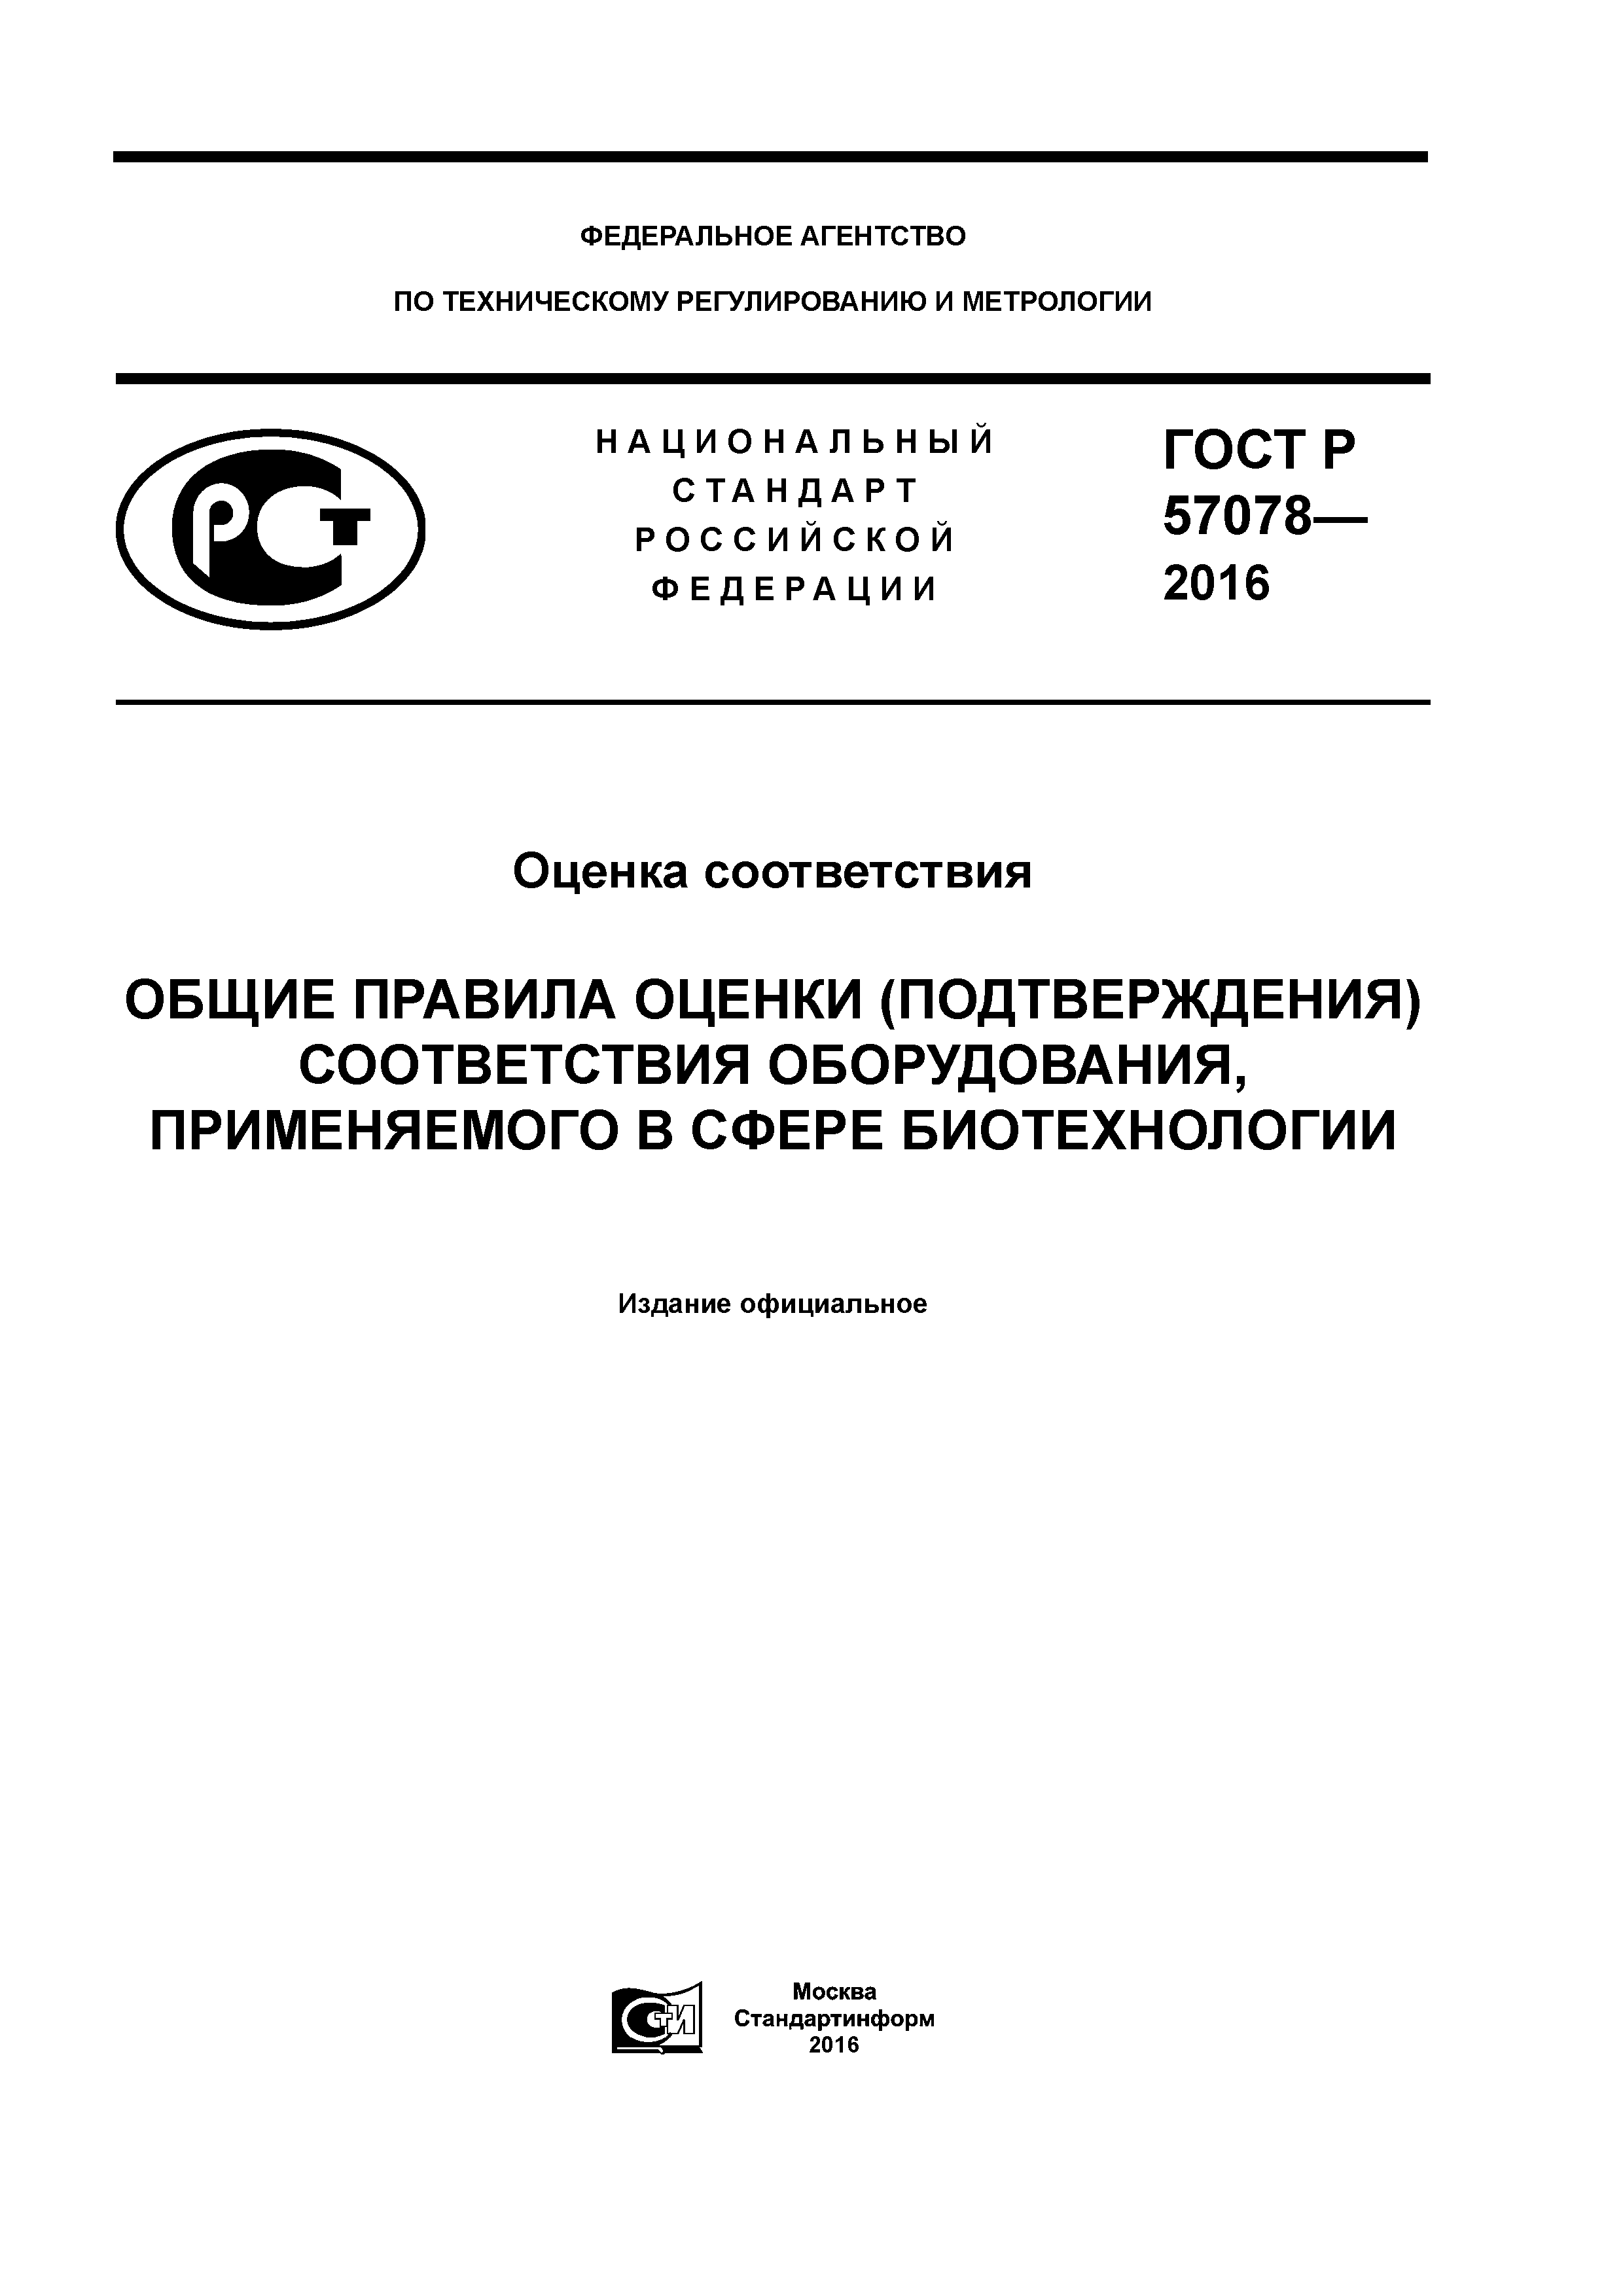 ГОСТ Р 57078-2016